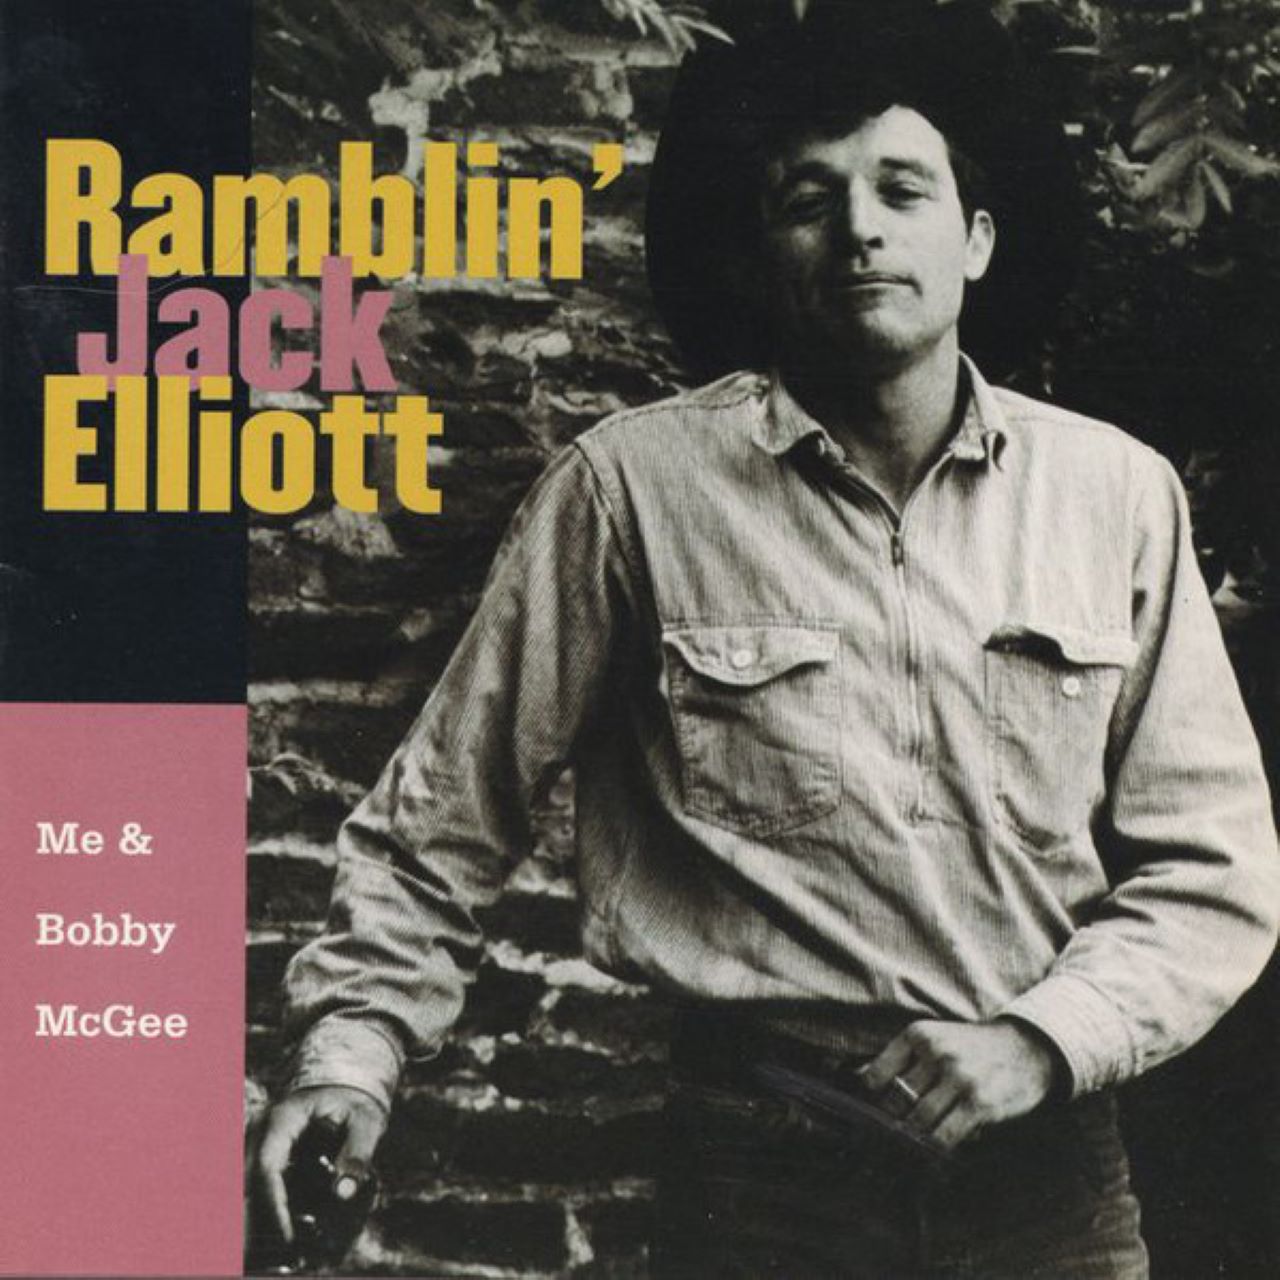 Ramblin' Jack Elliott - Me and Bobby McGee cover album